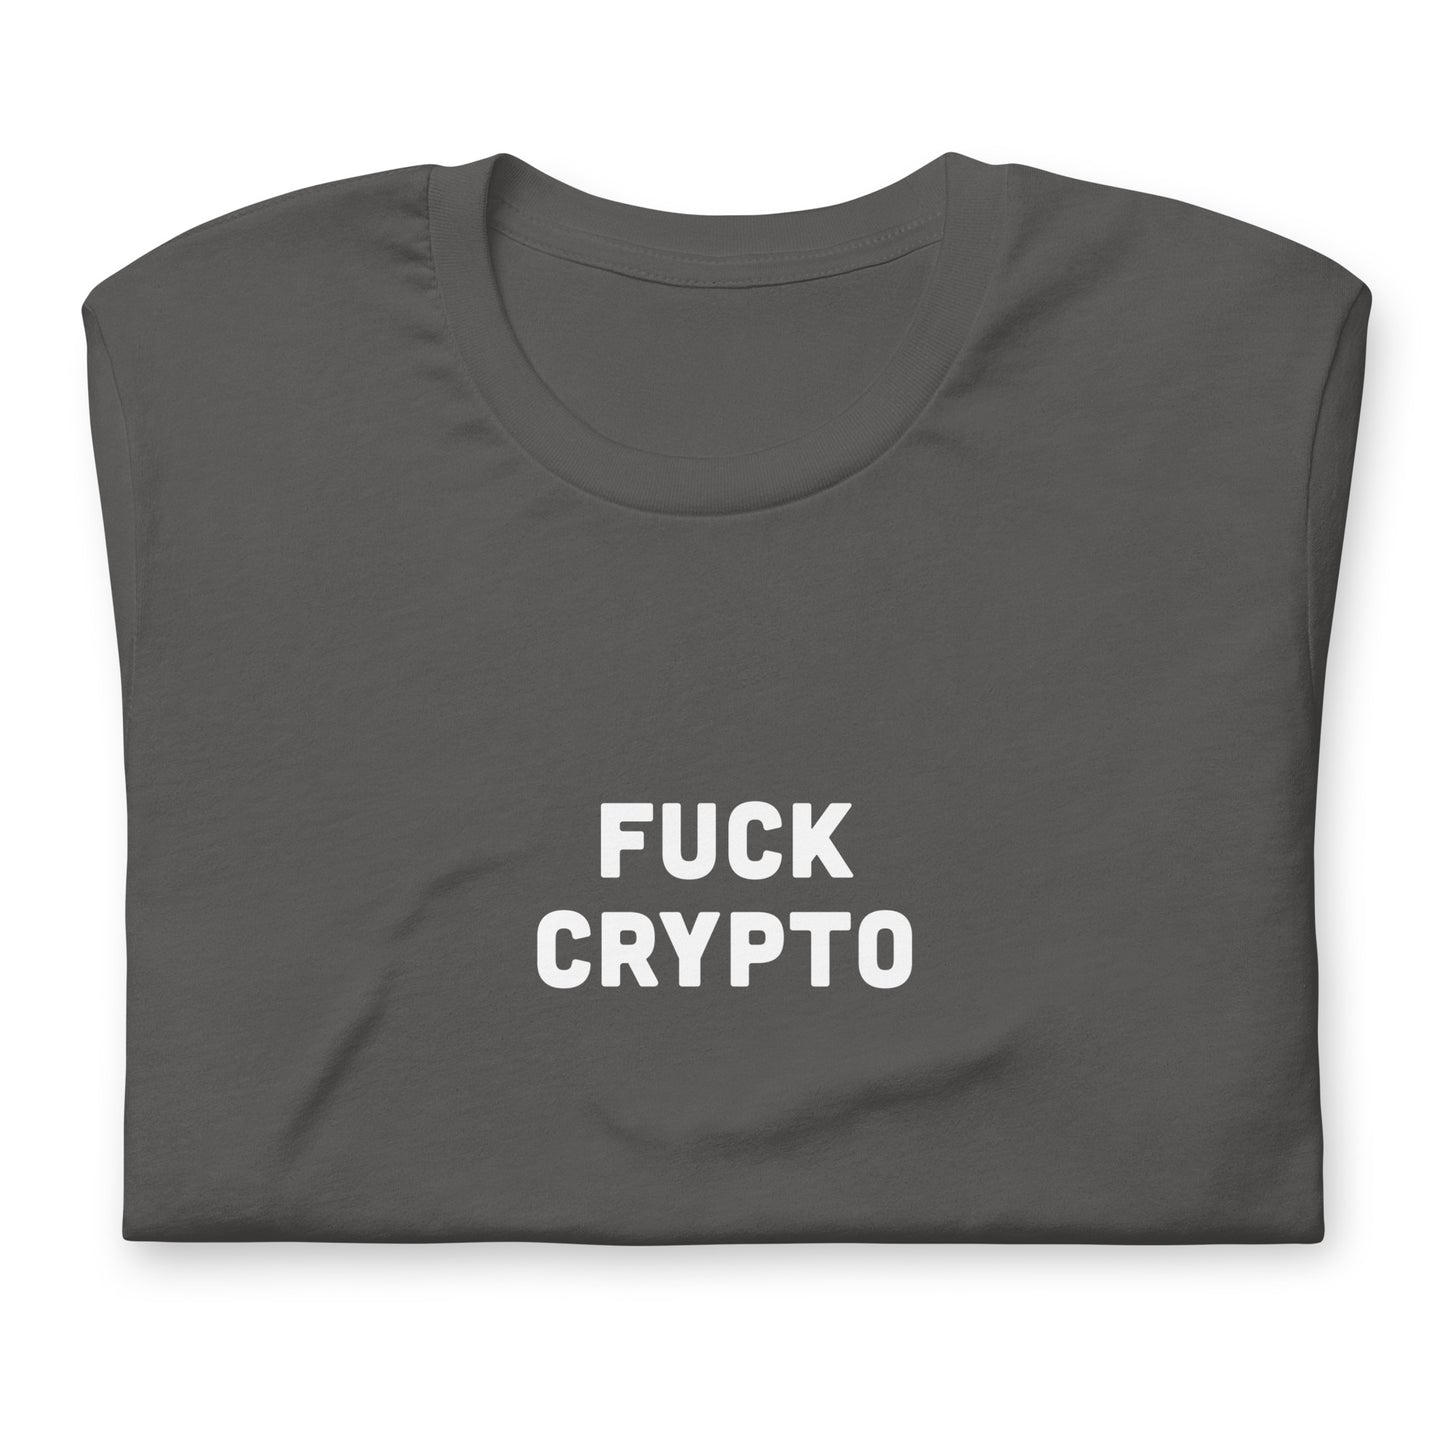 Fuck Crypto T-Shirt Size 2XL Color Black